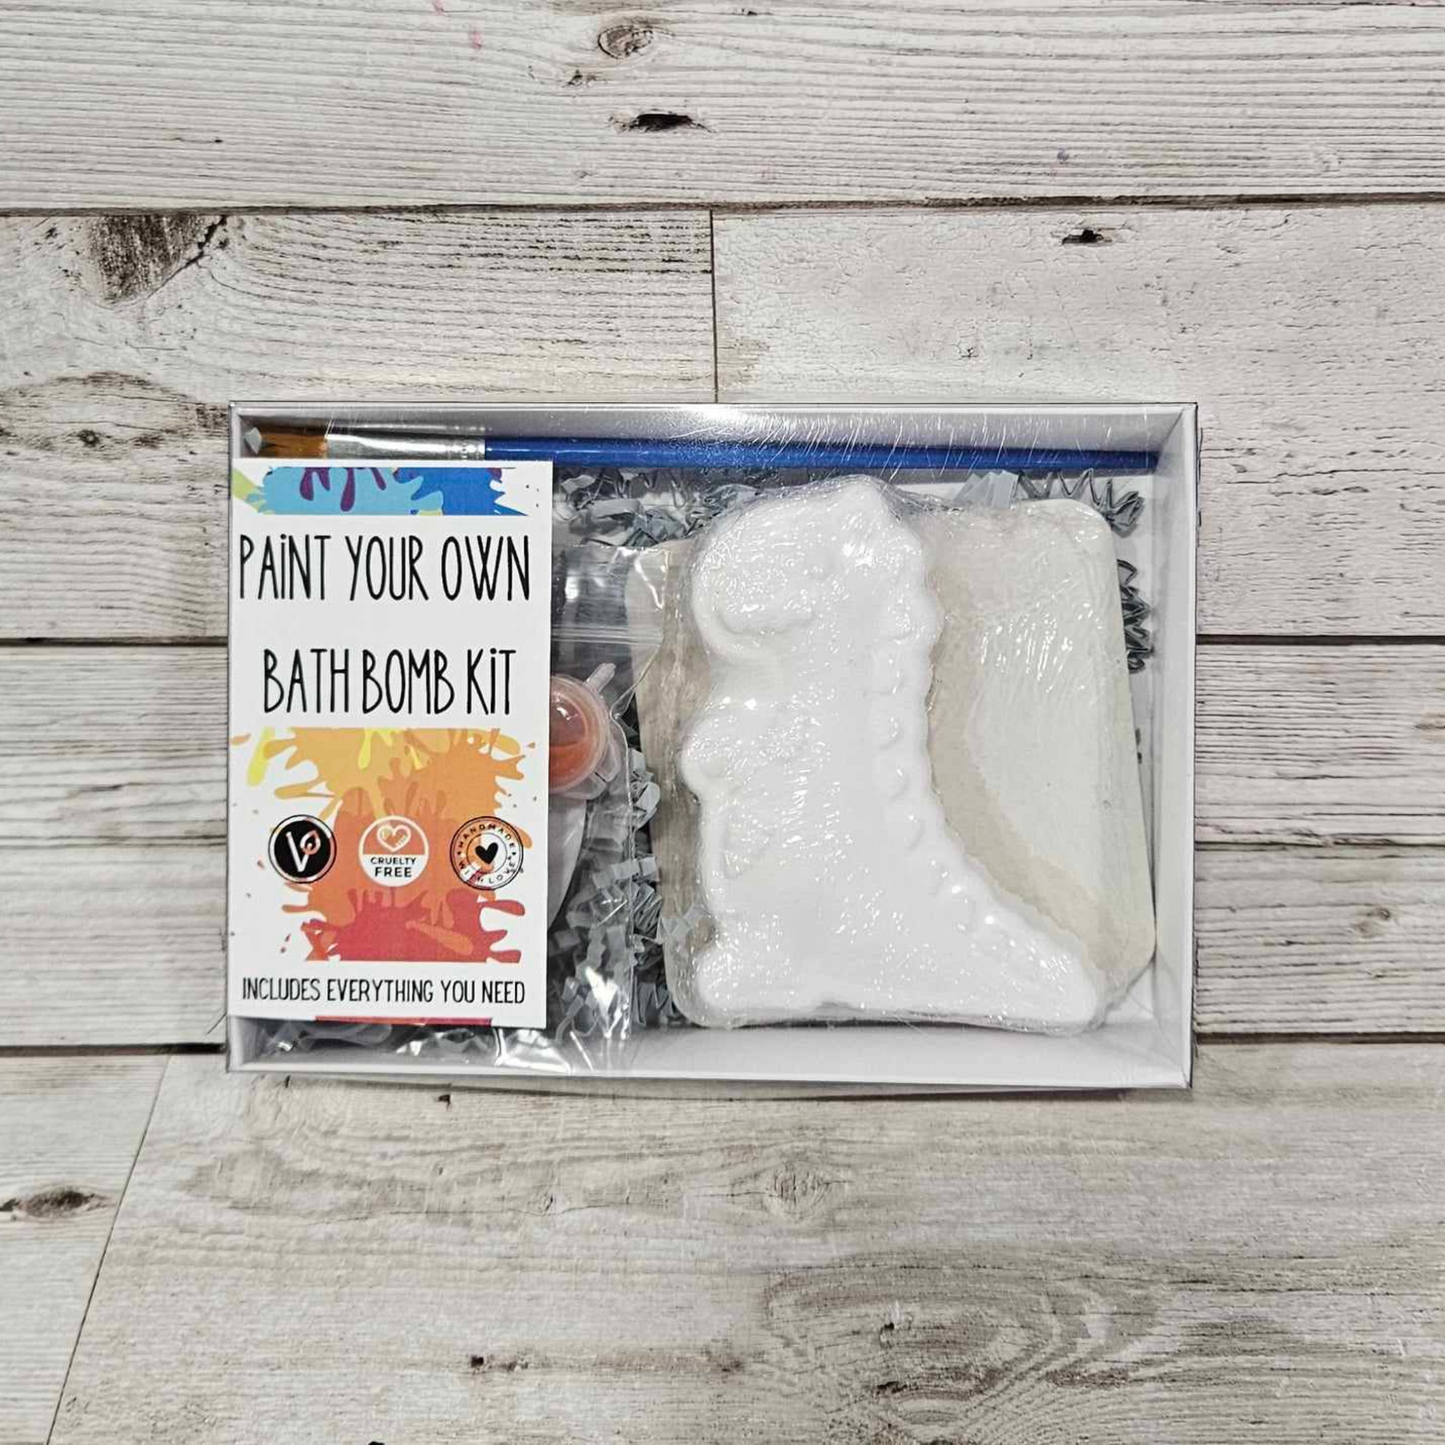 'Dinosaur' Paint your own Bath Bomb Kit